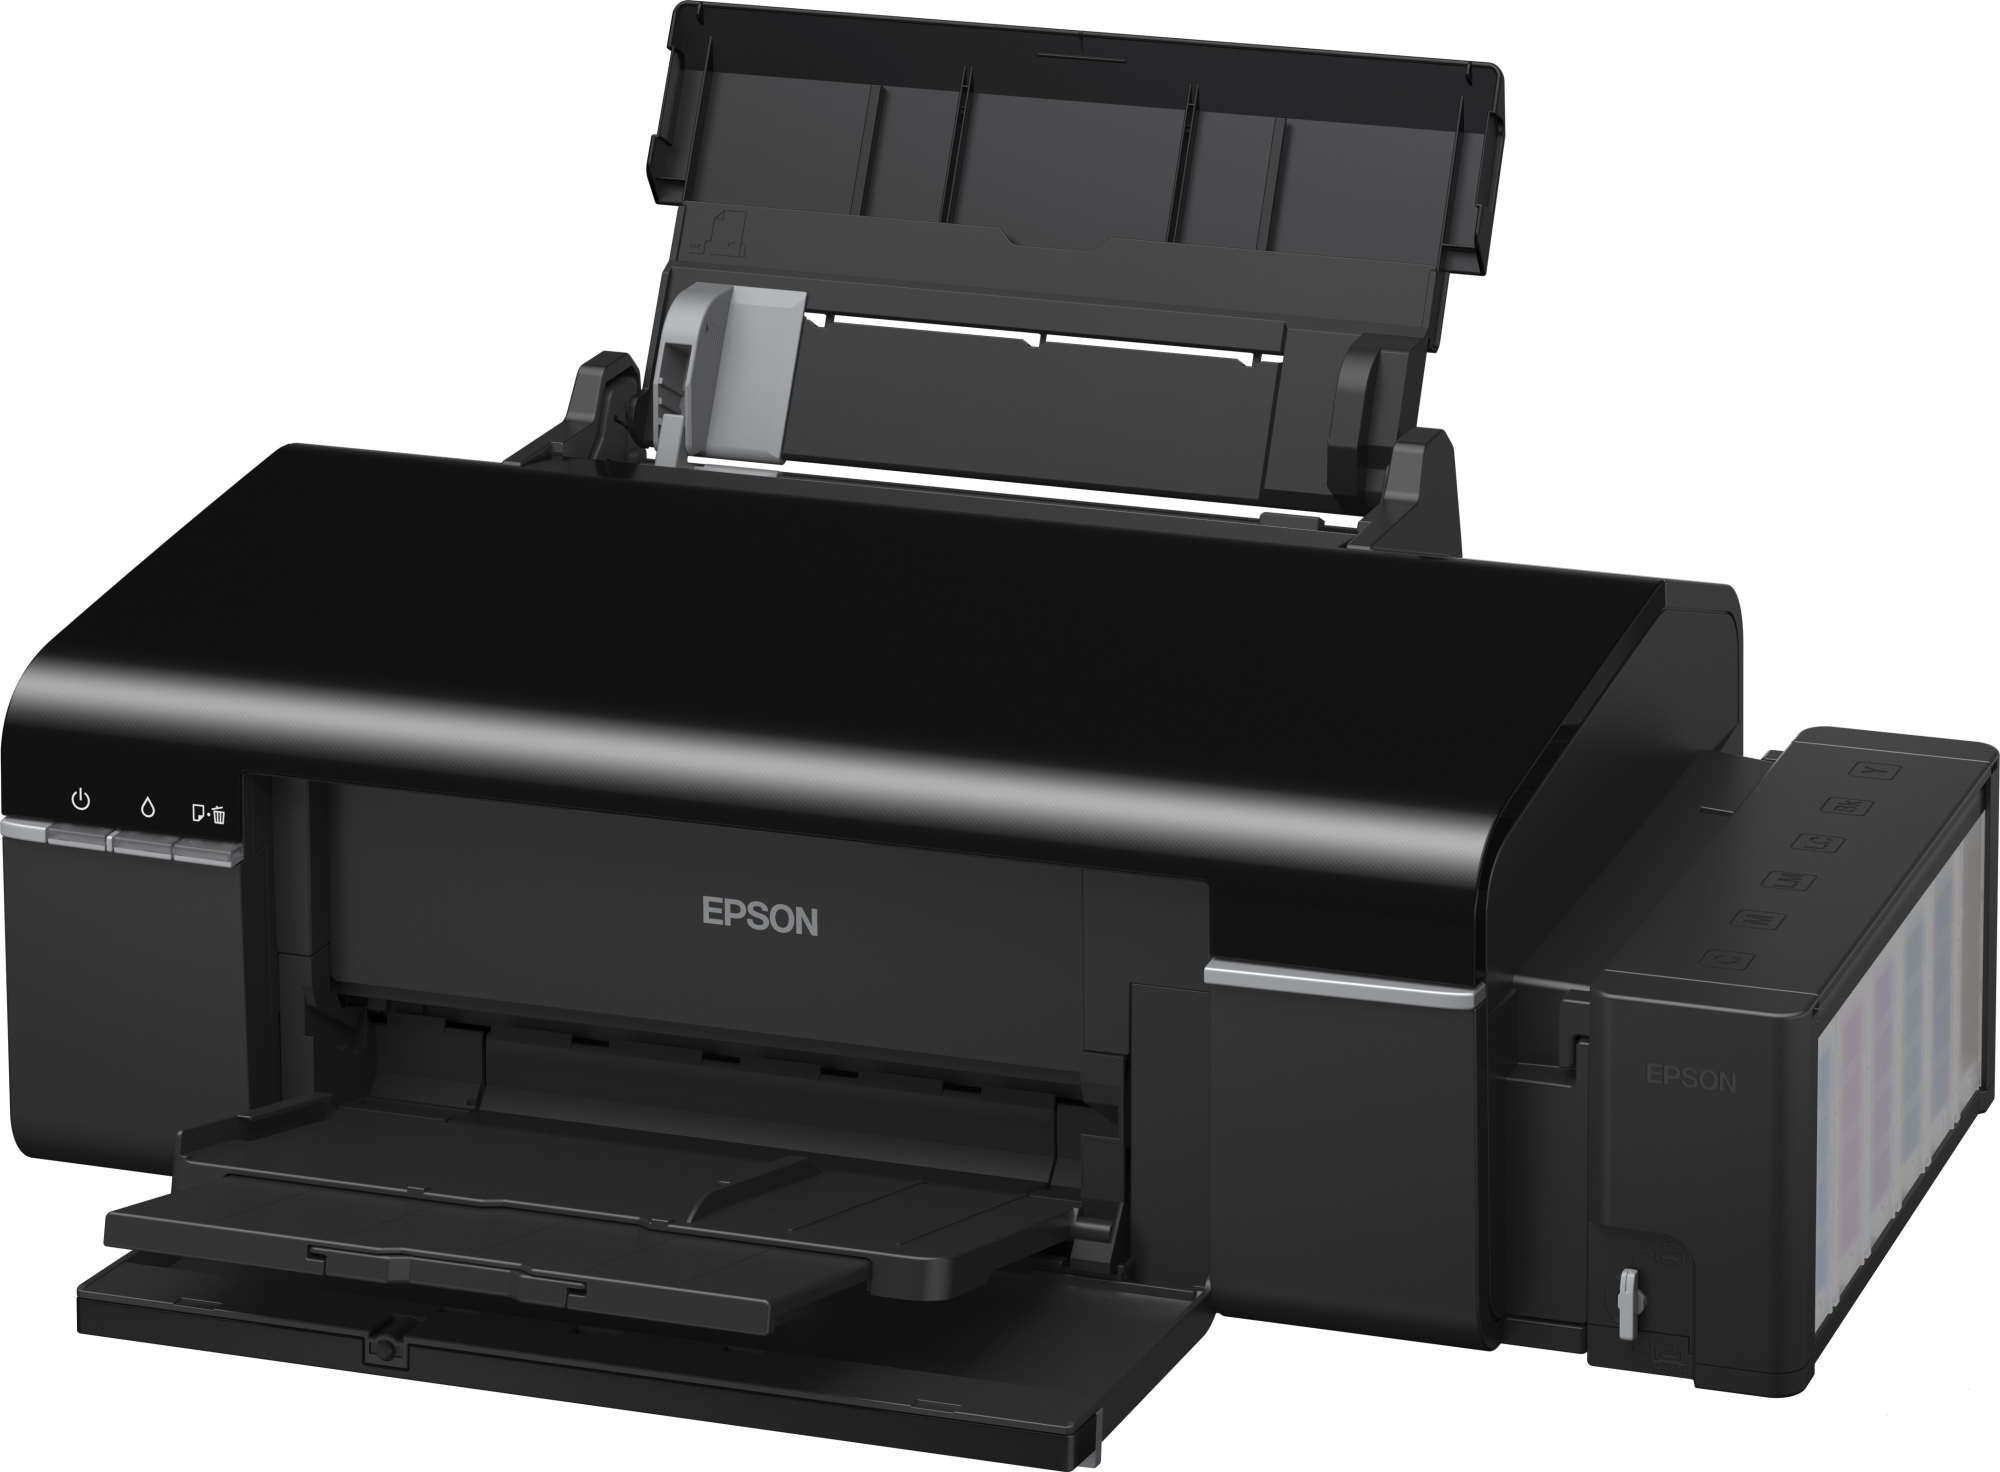 Принтер epson l купить. Epson l800. Принтер Эпсон l800. Принтер Эпсон 805. Струйный принтер Epson l800.